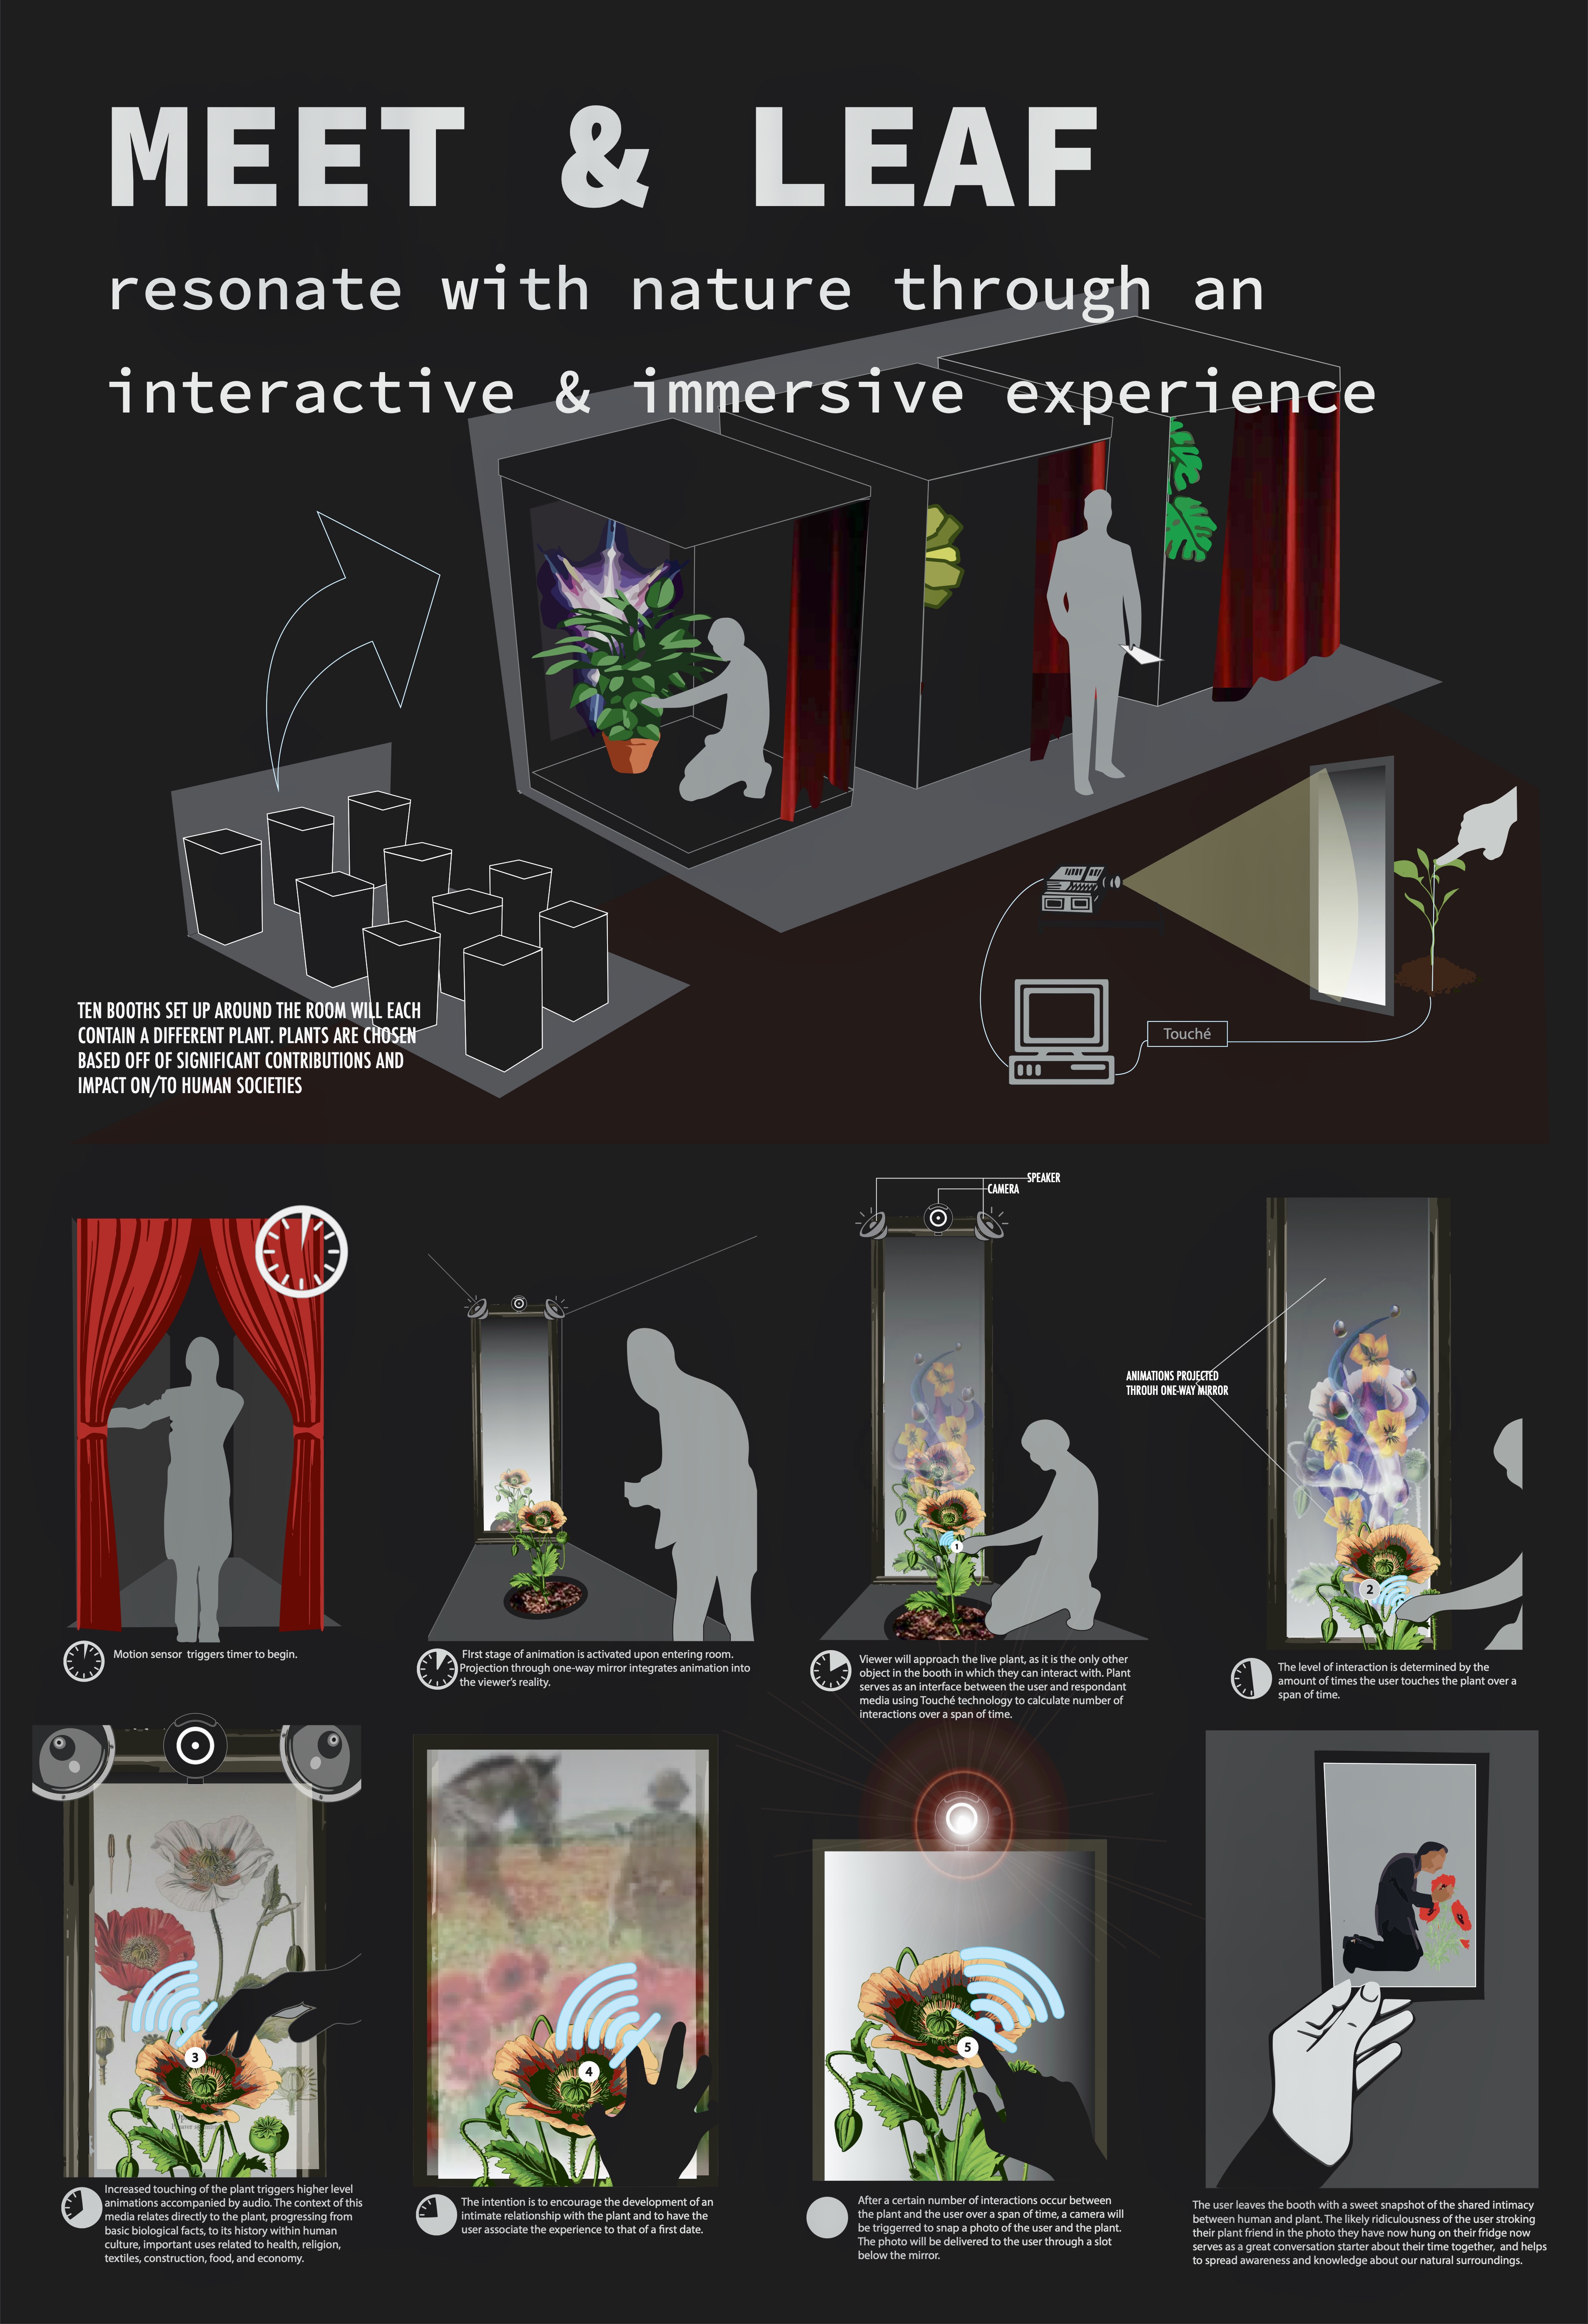 Narrative & Art-Making Through Digital Interfaces